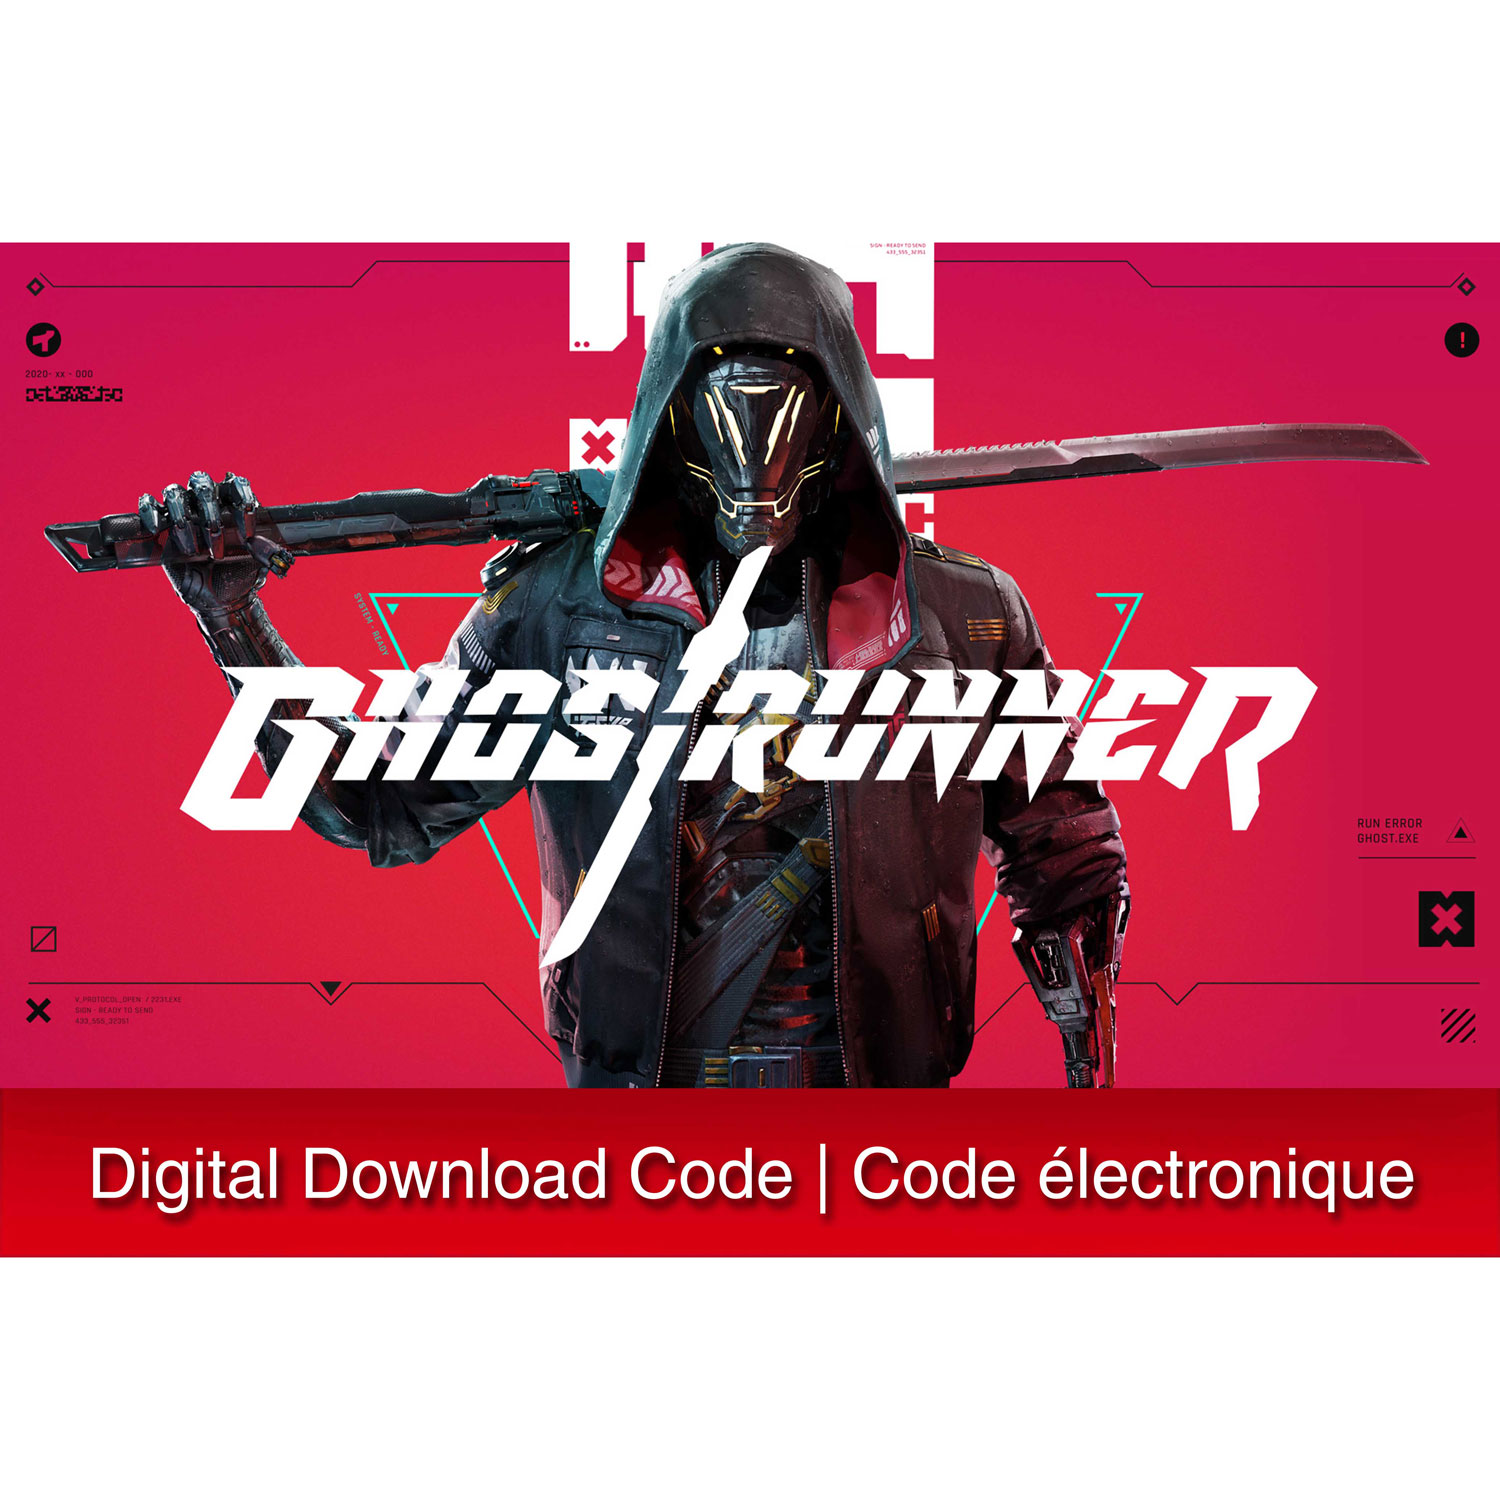 Ghostrunner (Switch) - Digital Download